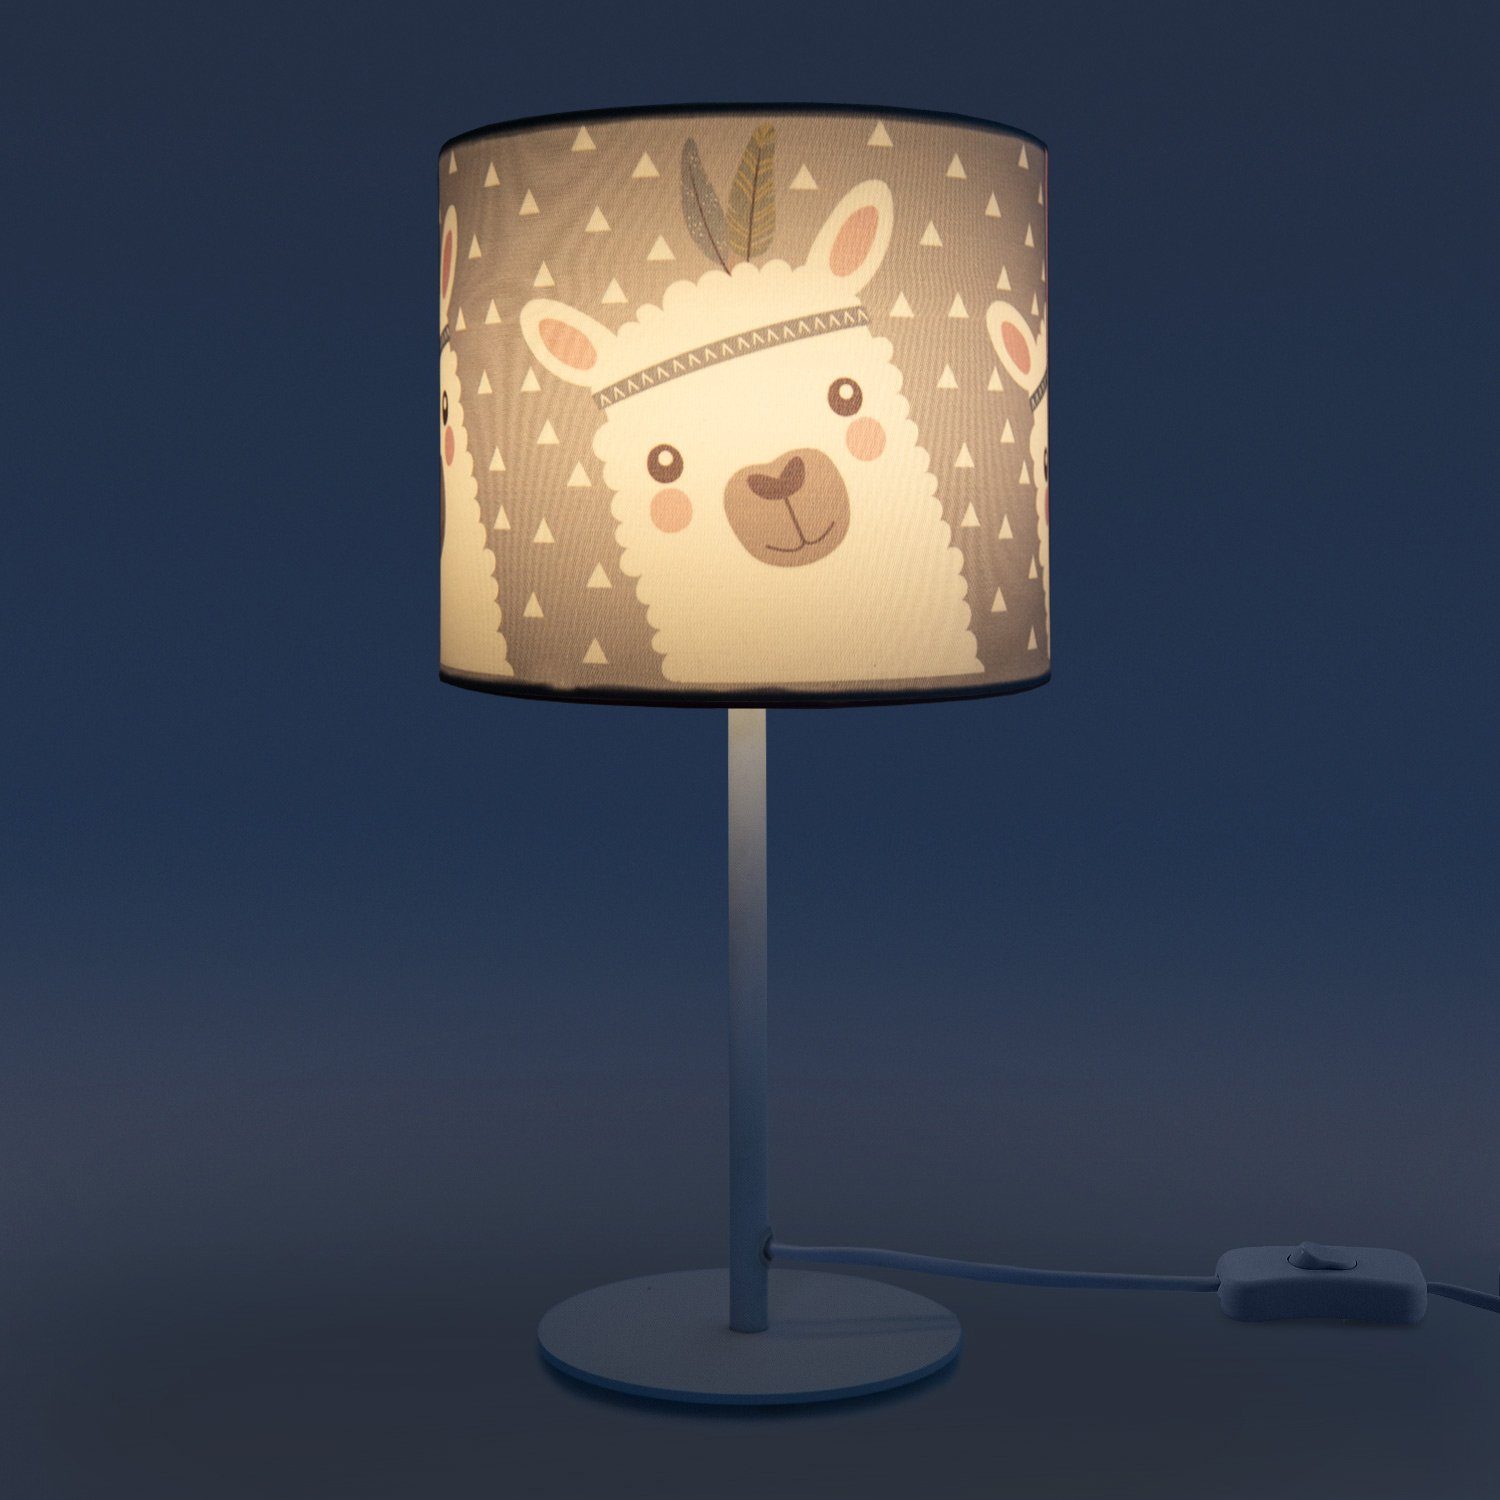 Ela Kinderlampe Lama-Motiv, Kinderzimmer E14 Paco Mit Tischleuchte Home Lampe LED 214, Leuchtmittel, Tischleuchte ohne